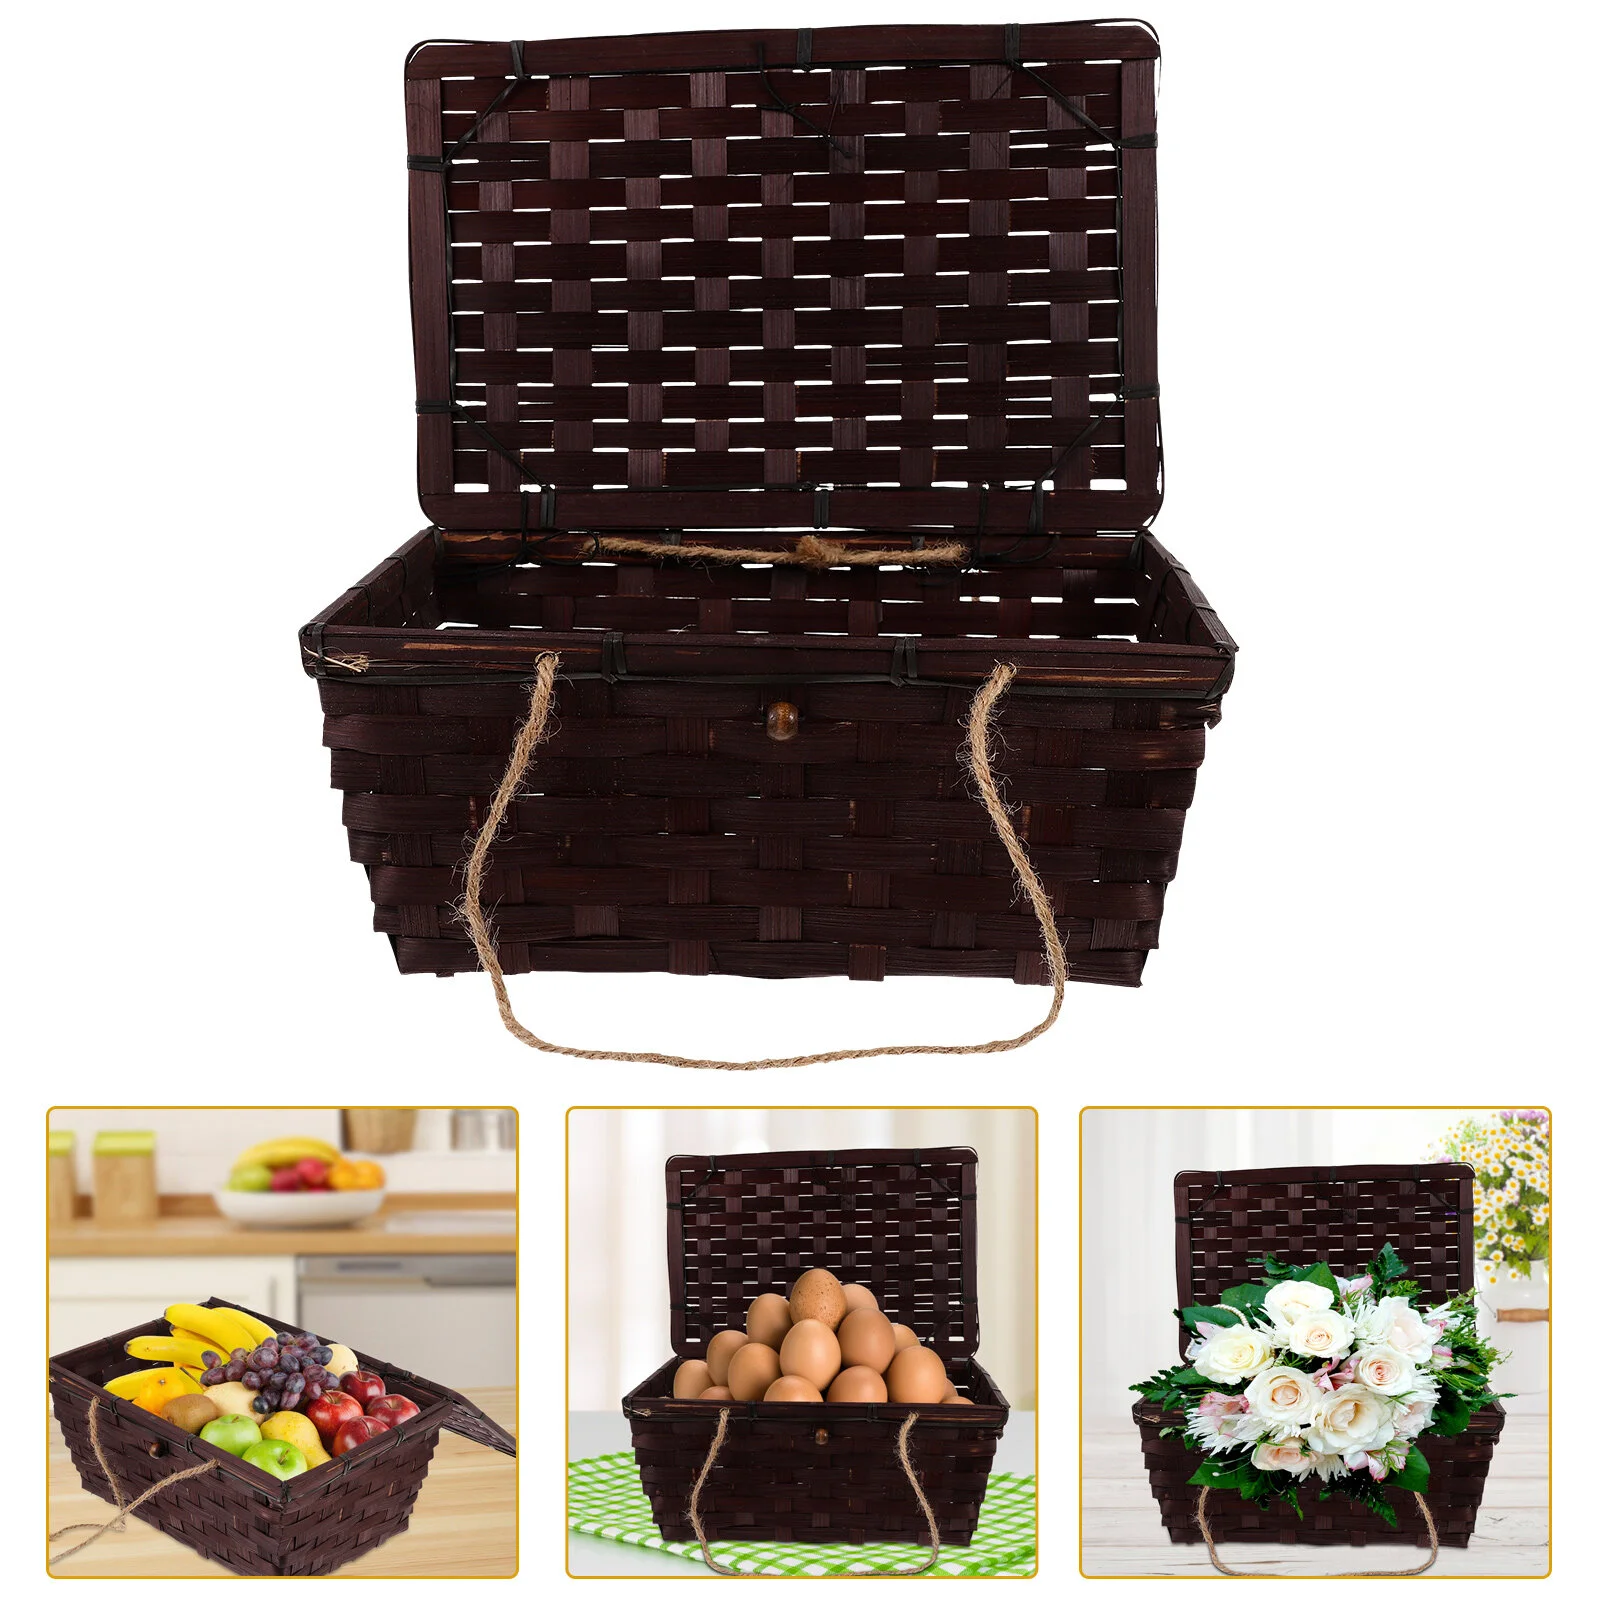 

Basket Wicker Storage Picnic Organizer Woven Flower Hamper Bread Bin Egg Vegetable Baskets Kitchen Bamboo Blanket Desktop Rattan